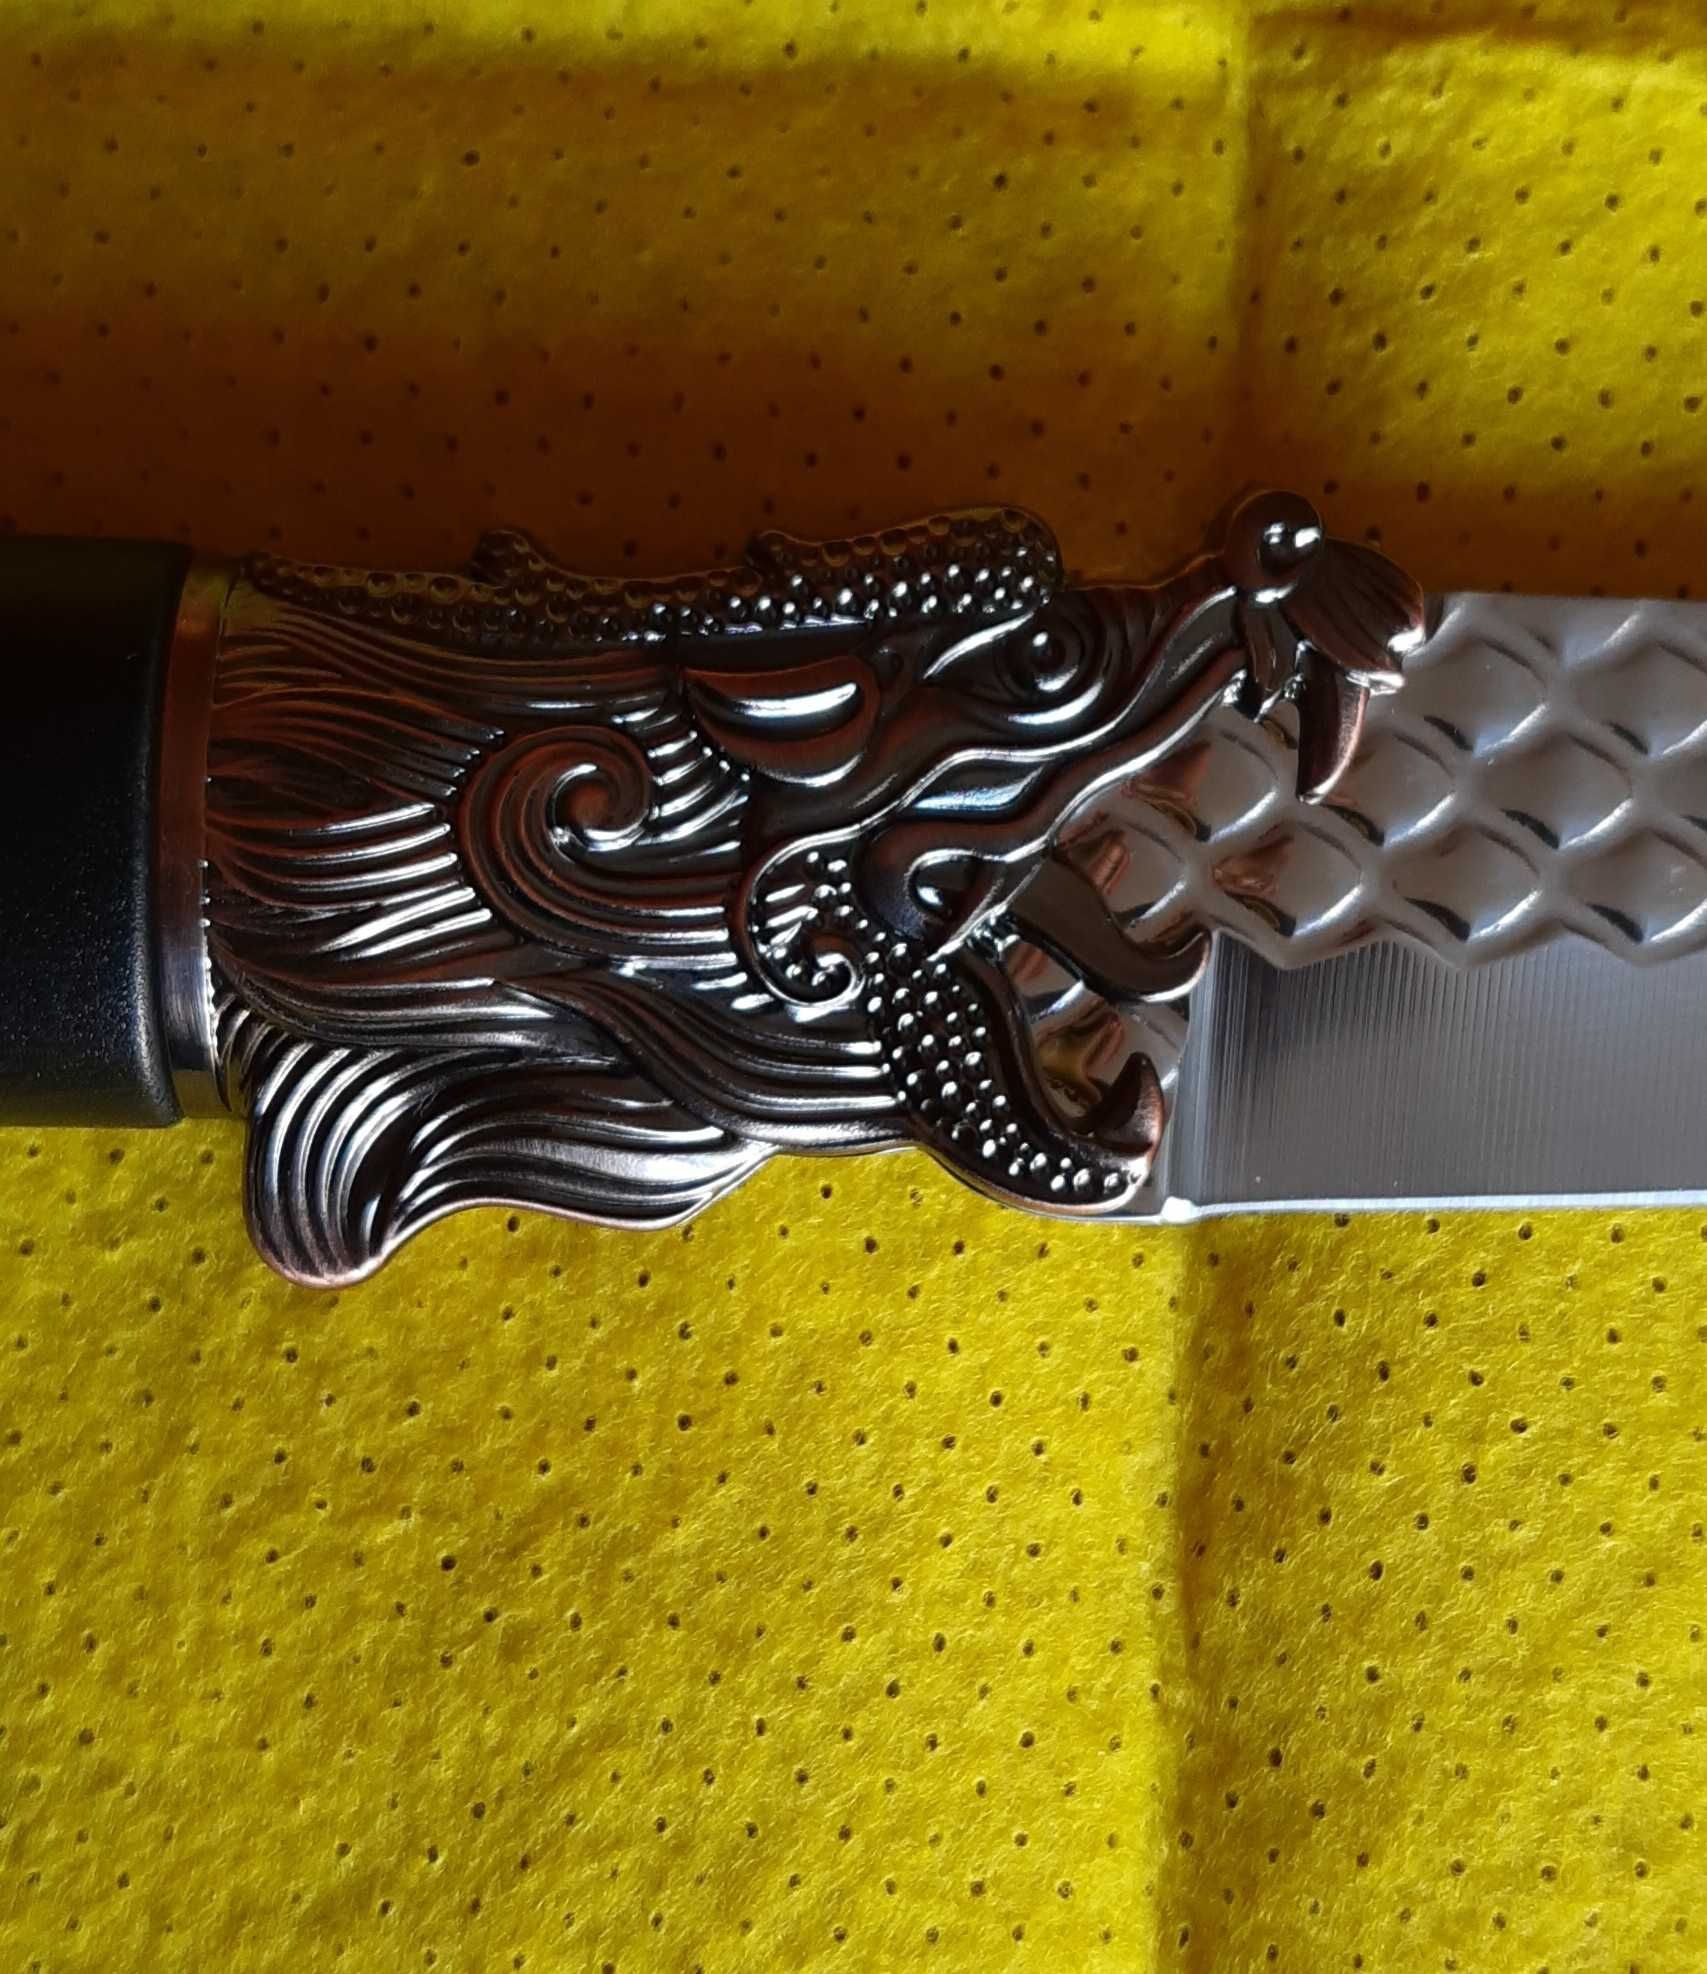 Nóż z pokrowcem japoński